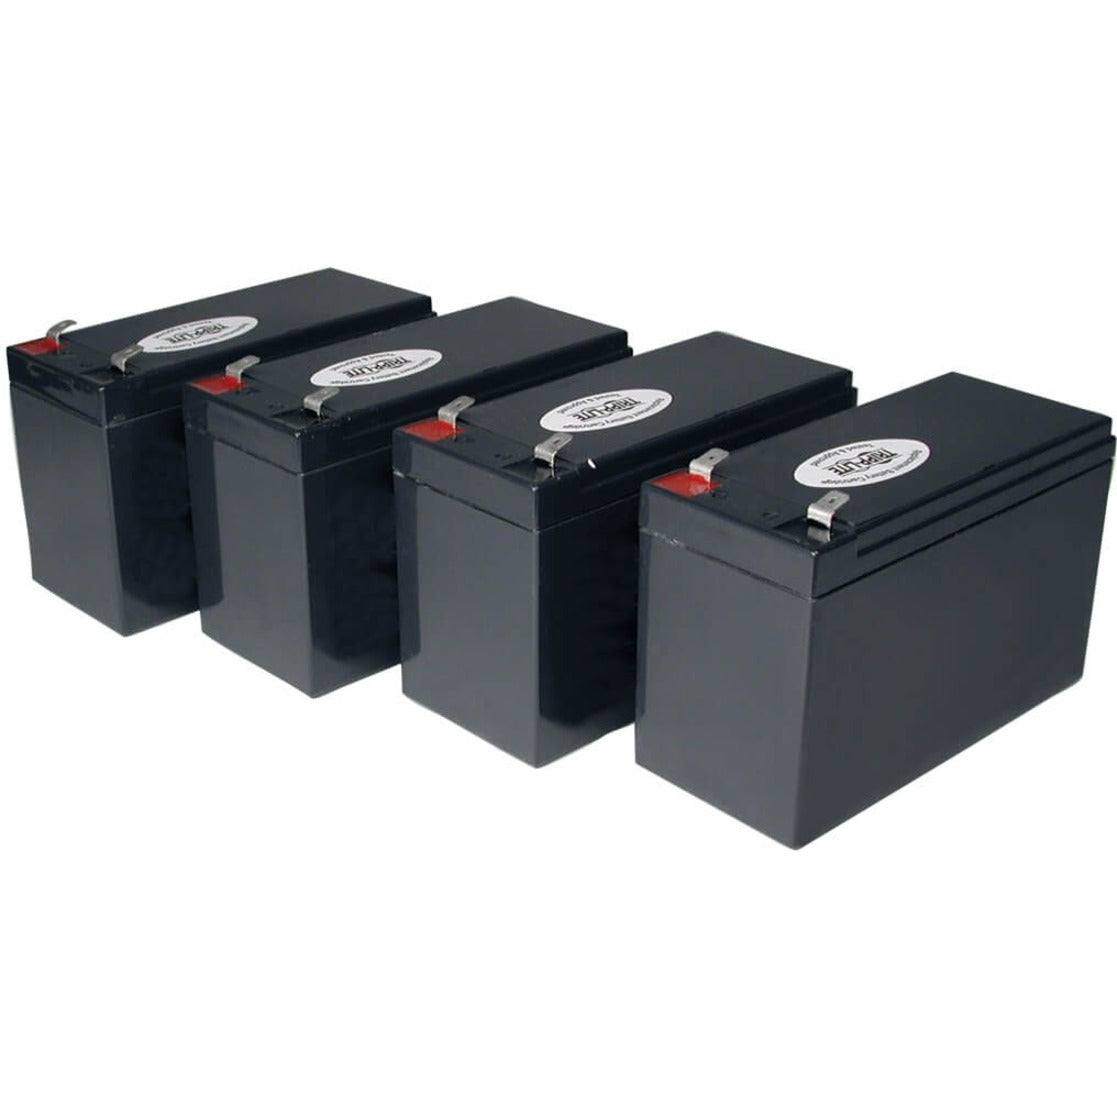 Tripp Lite RBC54 Replacement Battery Cartridge 54, 4-Pack, 12V DC, Lead Acid, Maintenance-free